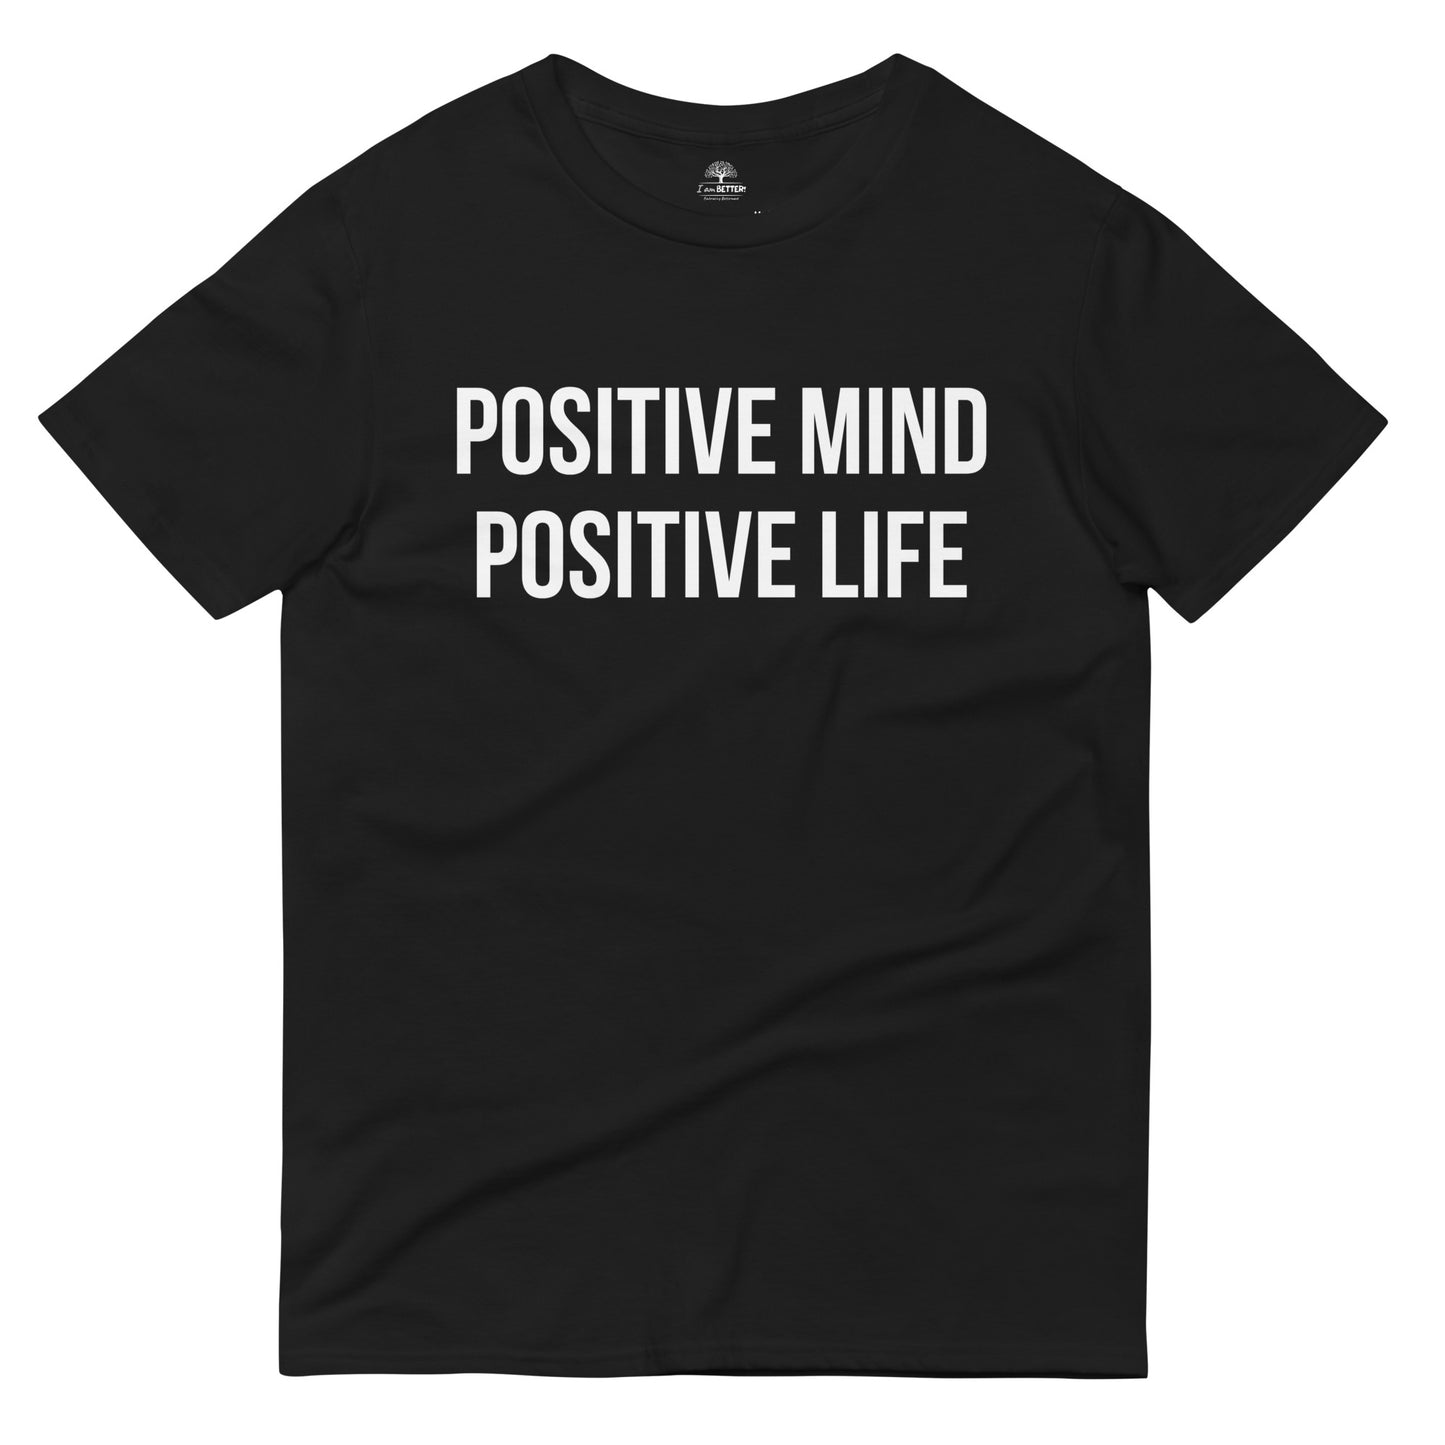 "Positive Mind, Positive Life" T-Shirt